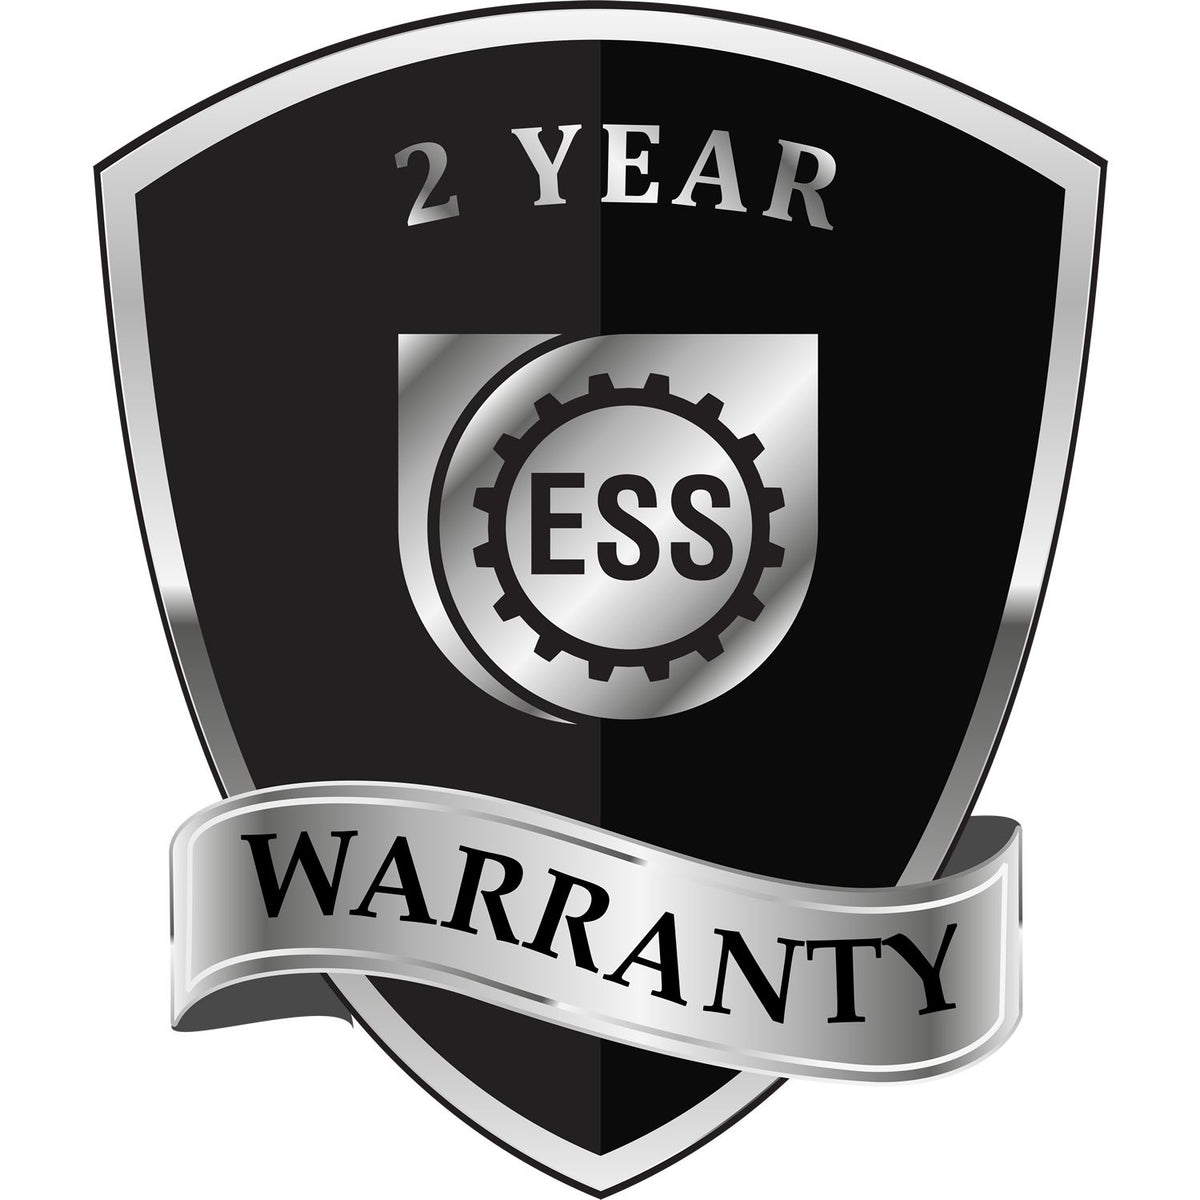 A black and silver badge or emblem showing warranty information for the Oregon Geologist Desk Seal